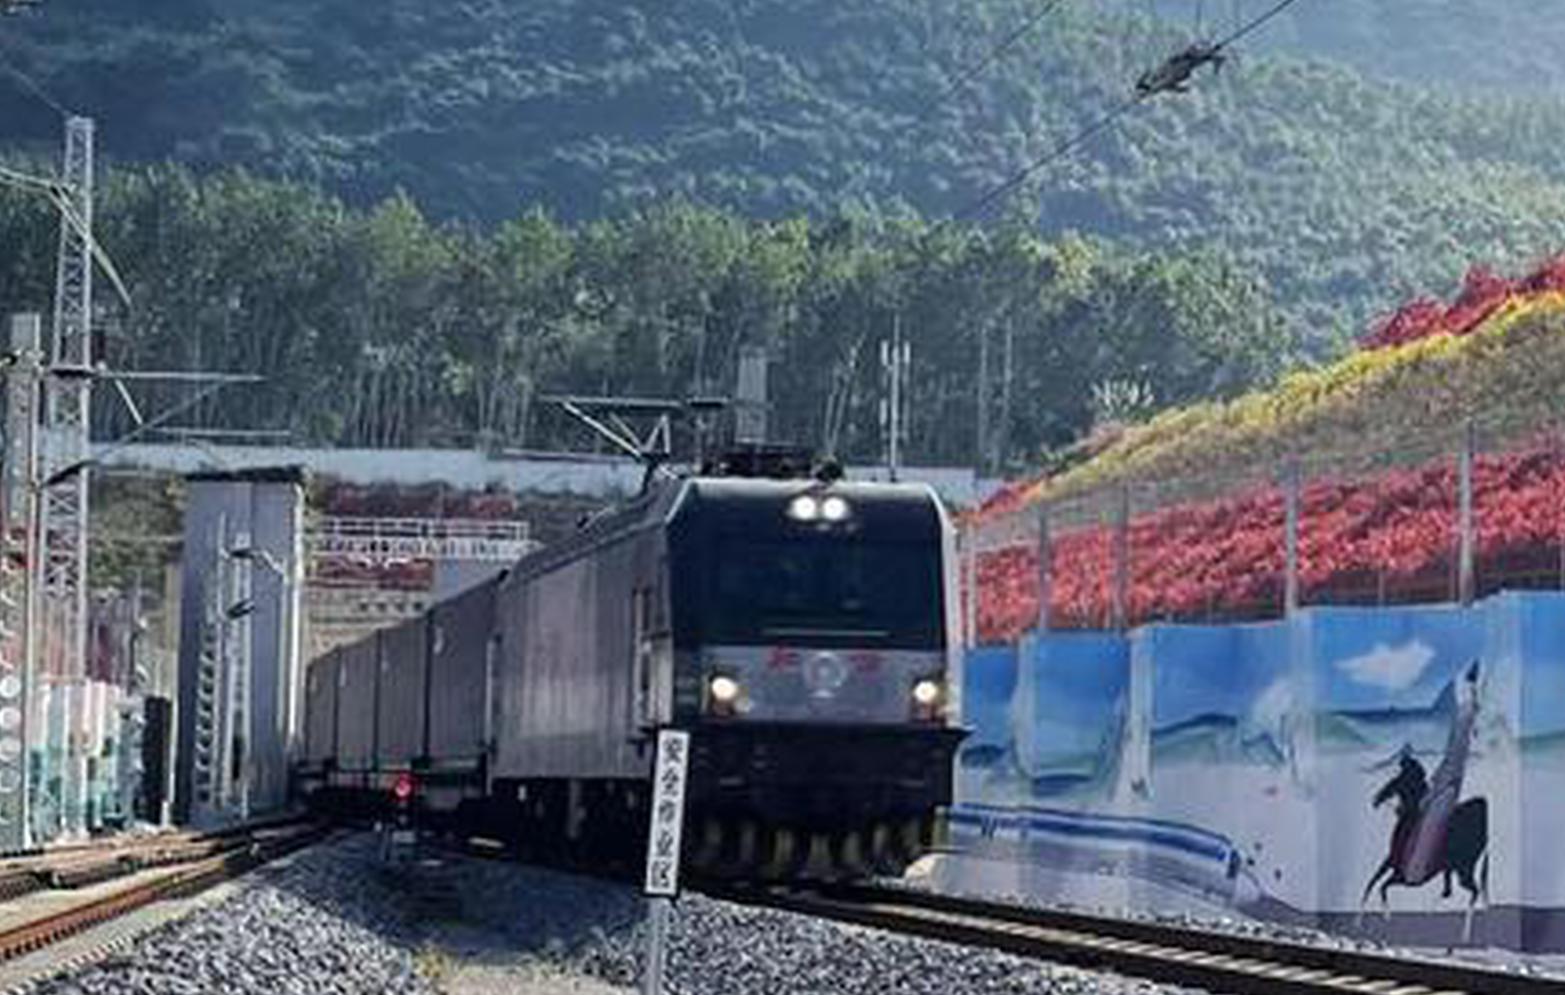 China-Laos Railway transports over 10 mln passengers